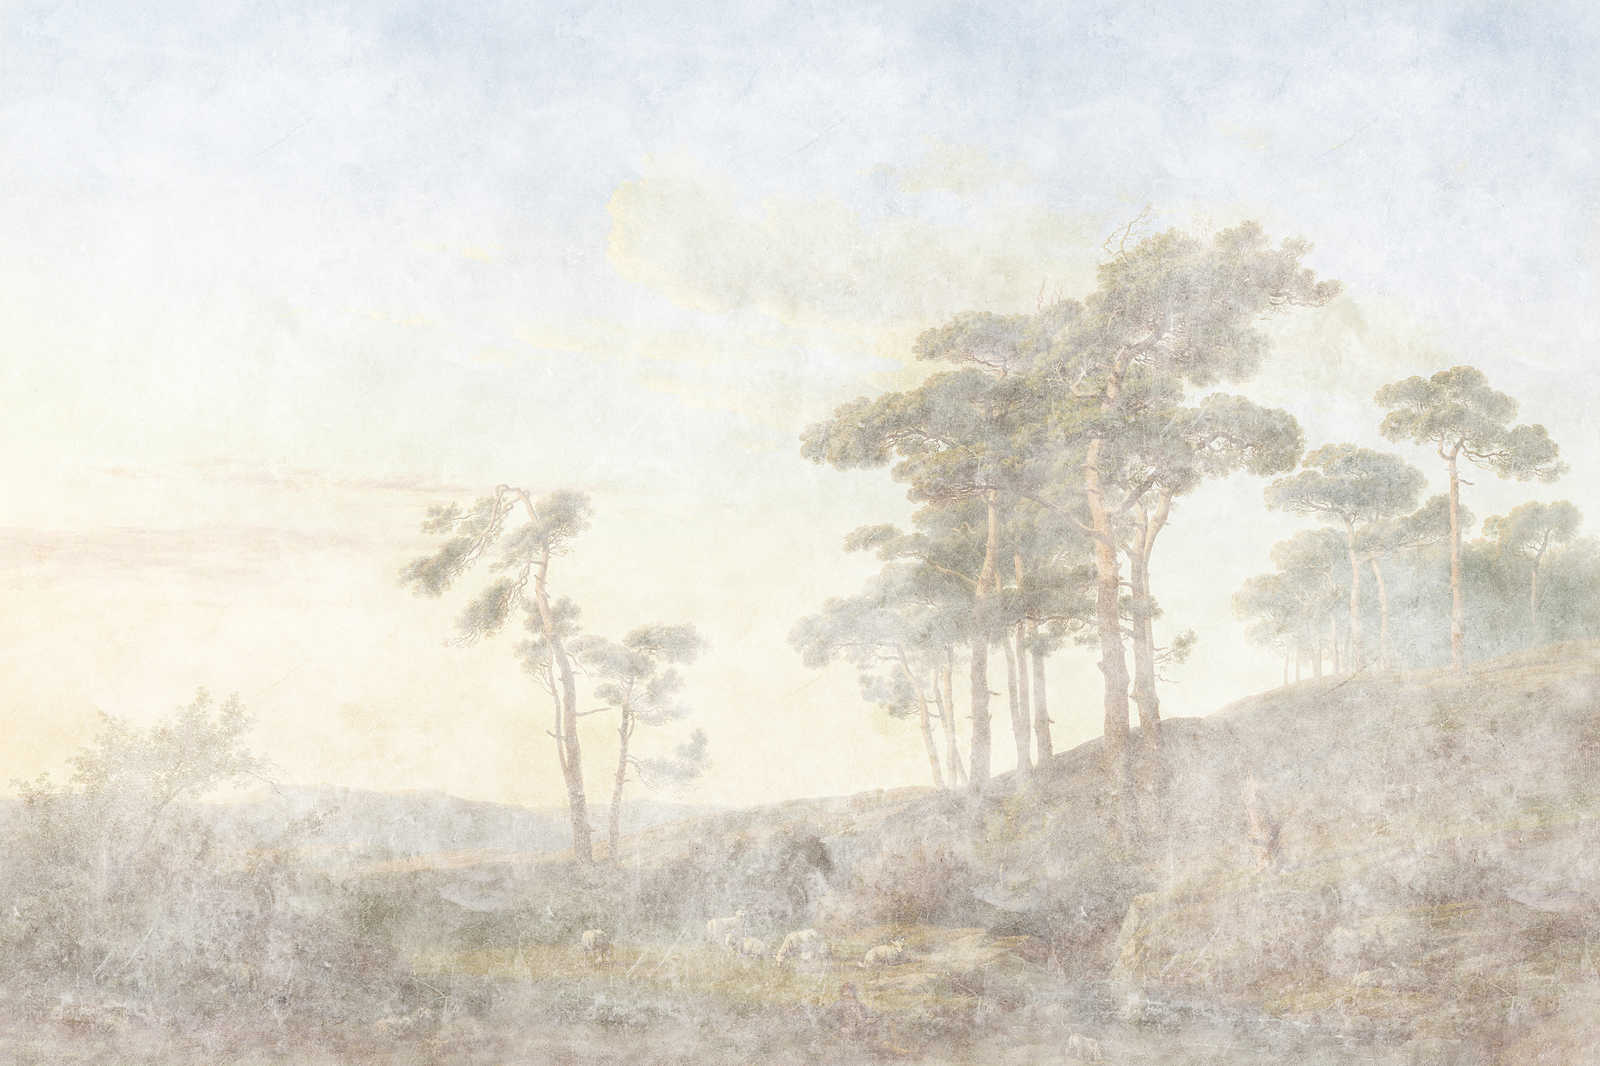             Romantic Grove 1 - Gemälde Leinwandbild verblasster Used Look – 1,20 m x 0,80 m
        